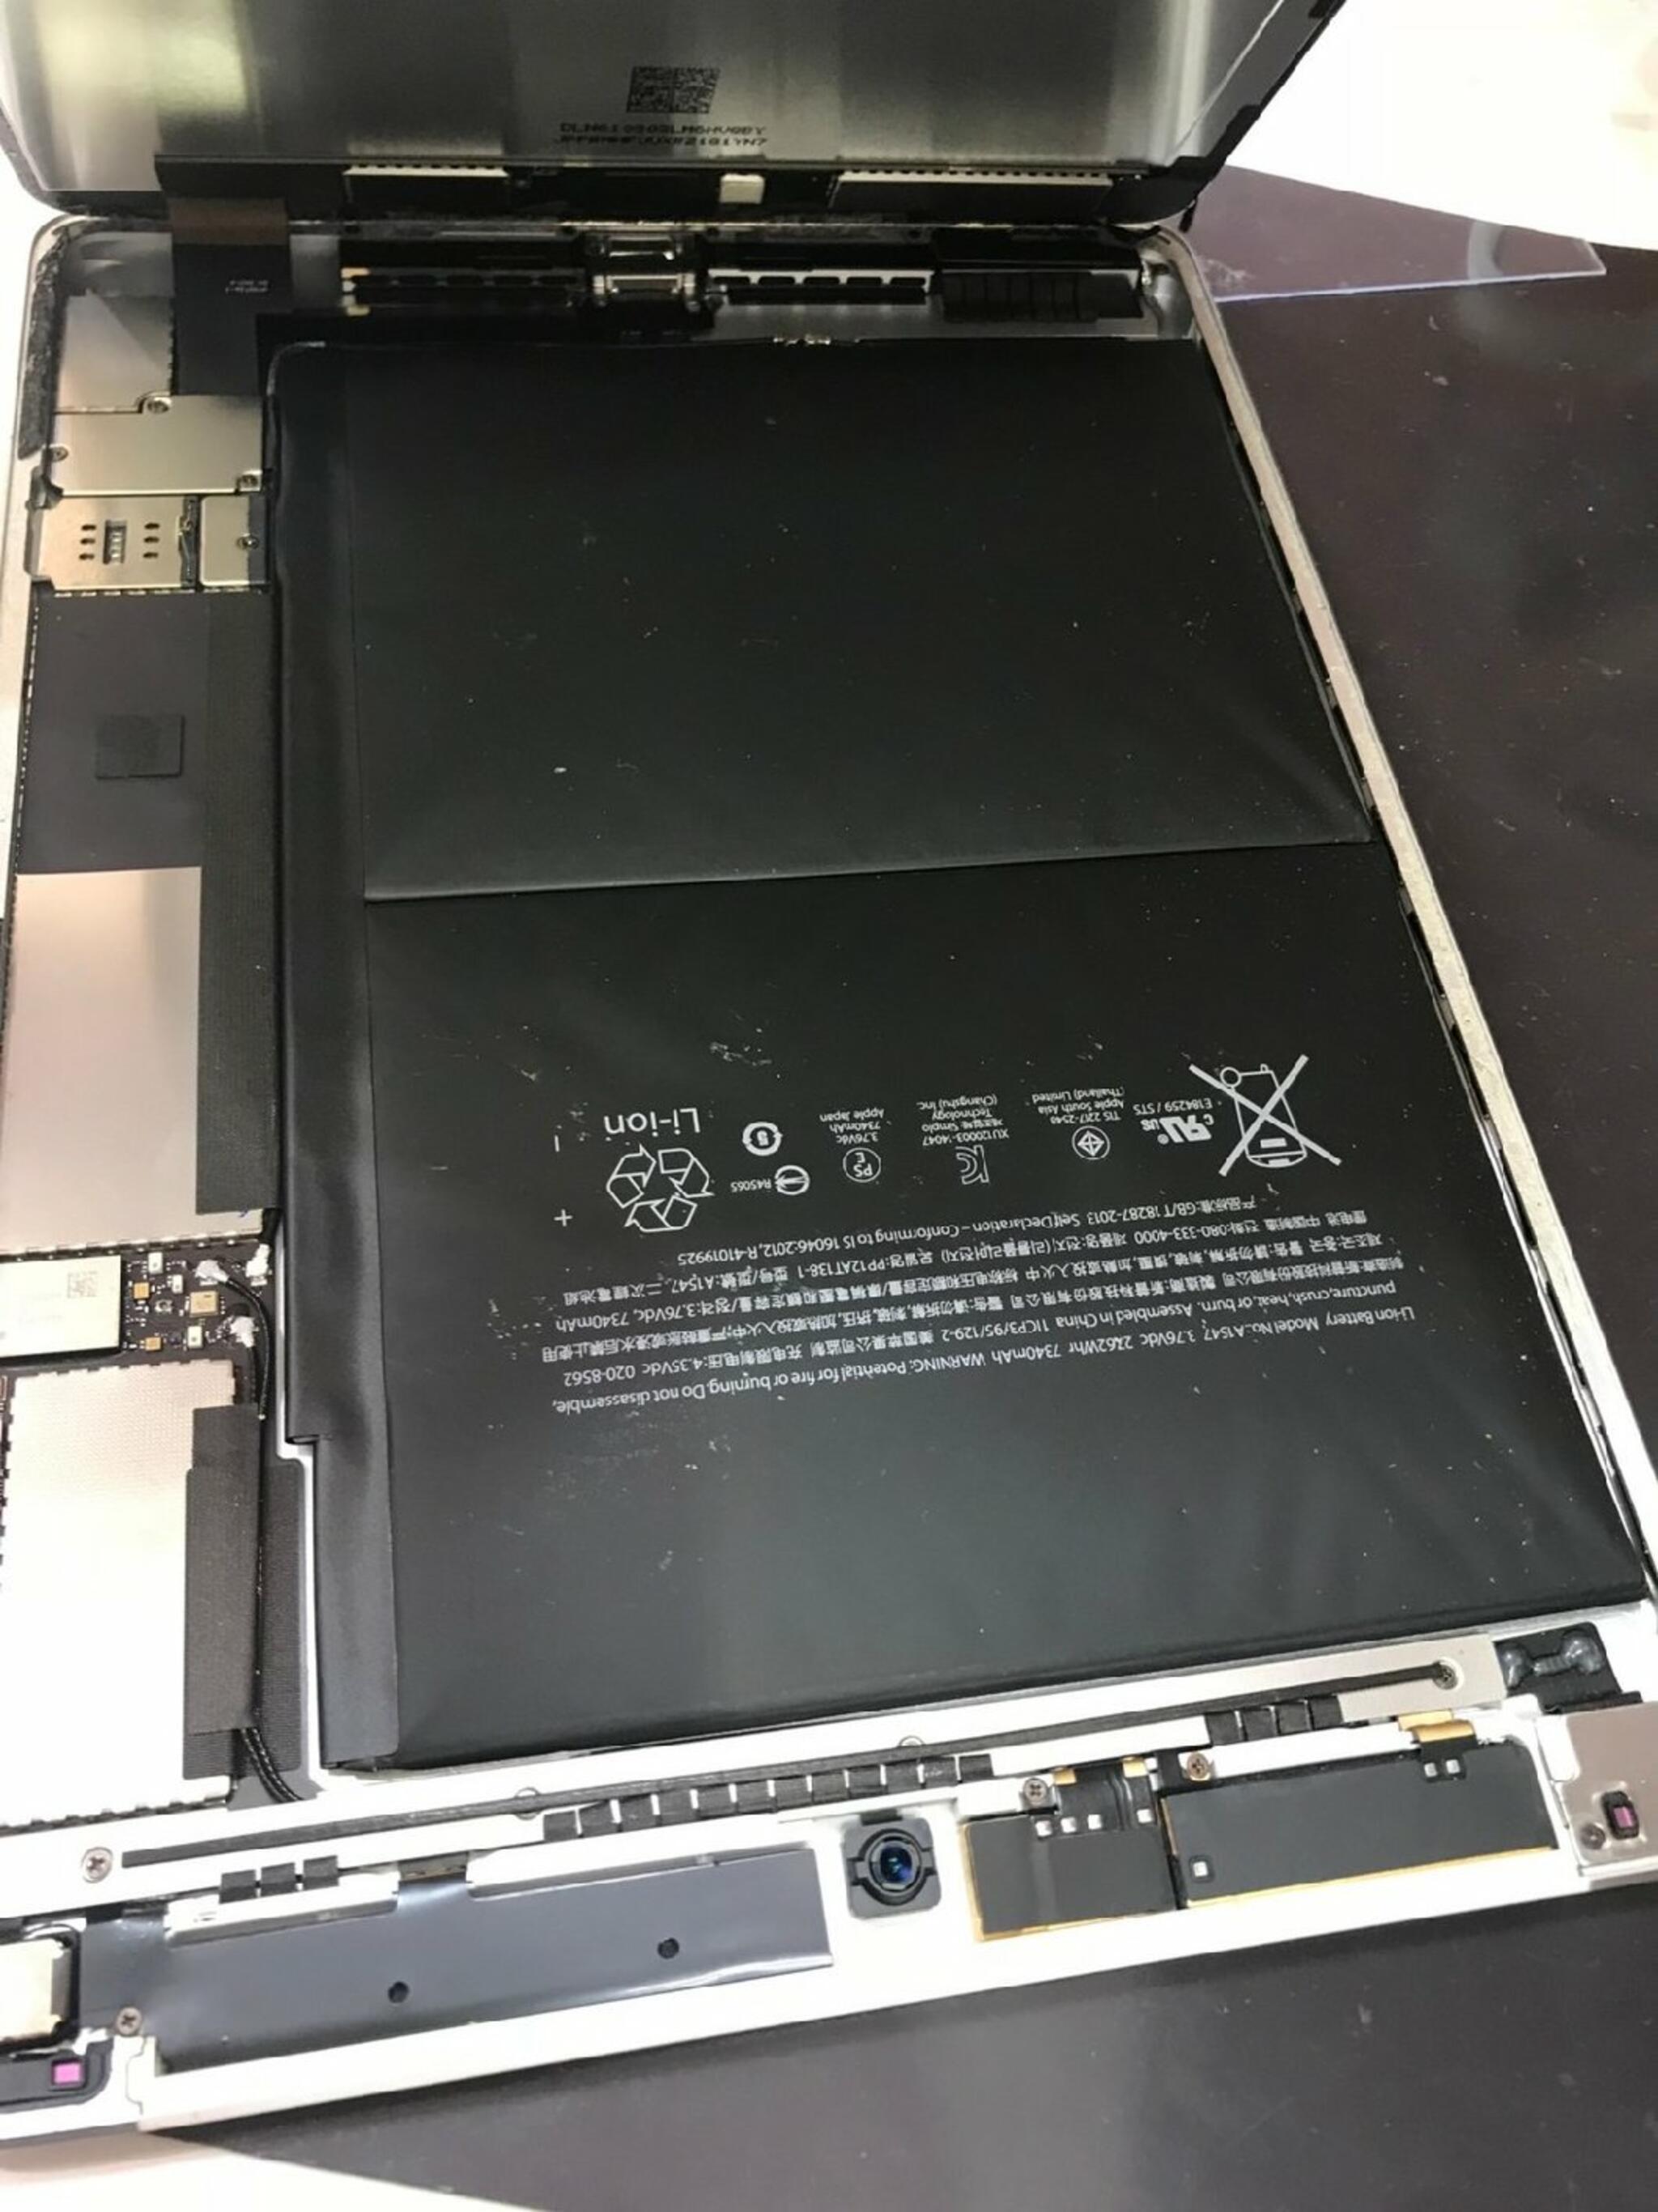 iPhone・iPad・Switch修理店 スマートクール イオンモール広島祇園店からのお知らせ(iPadのバッテリーの膨張も修理可能です)に関する写真